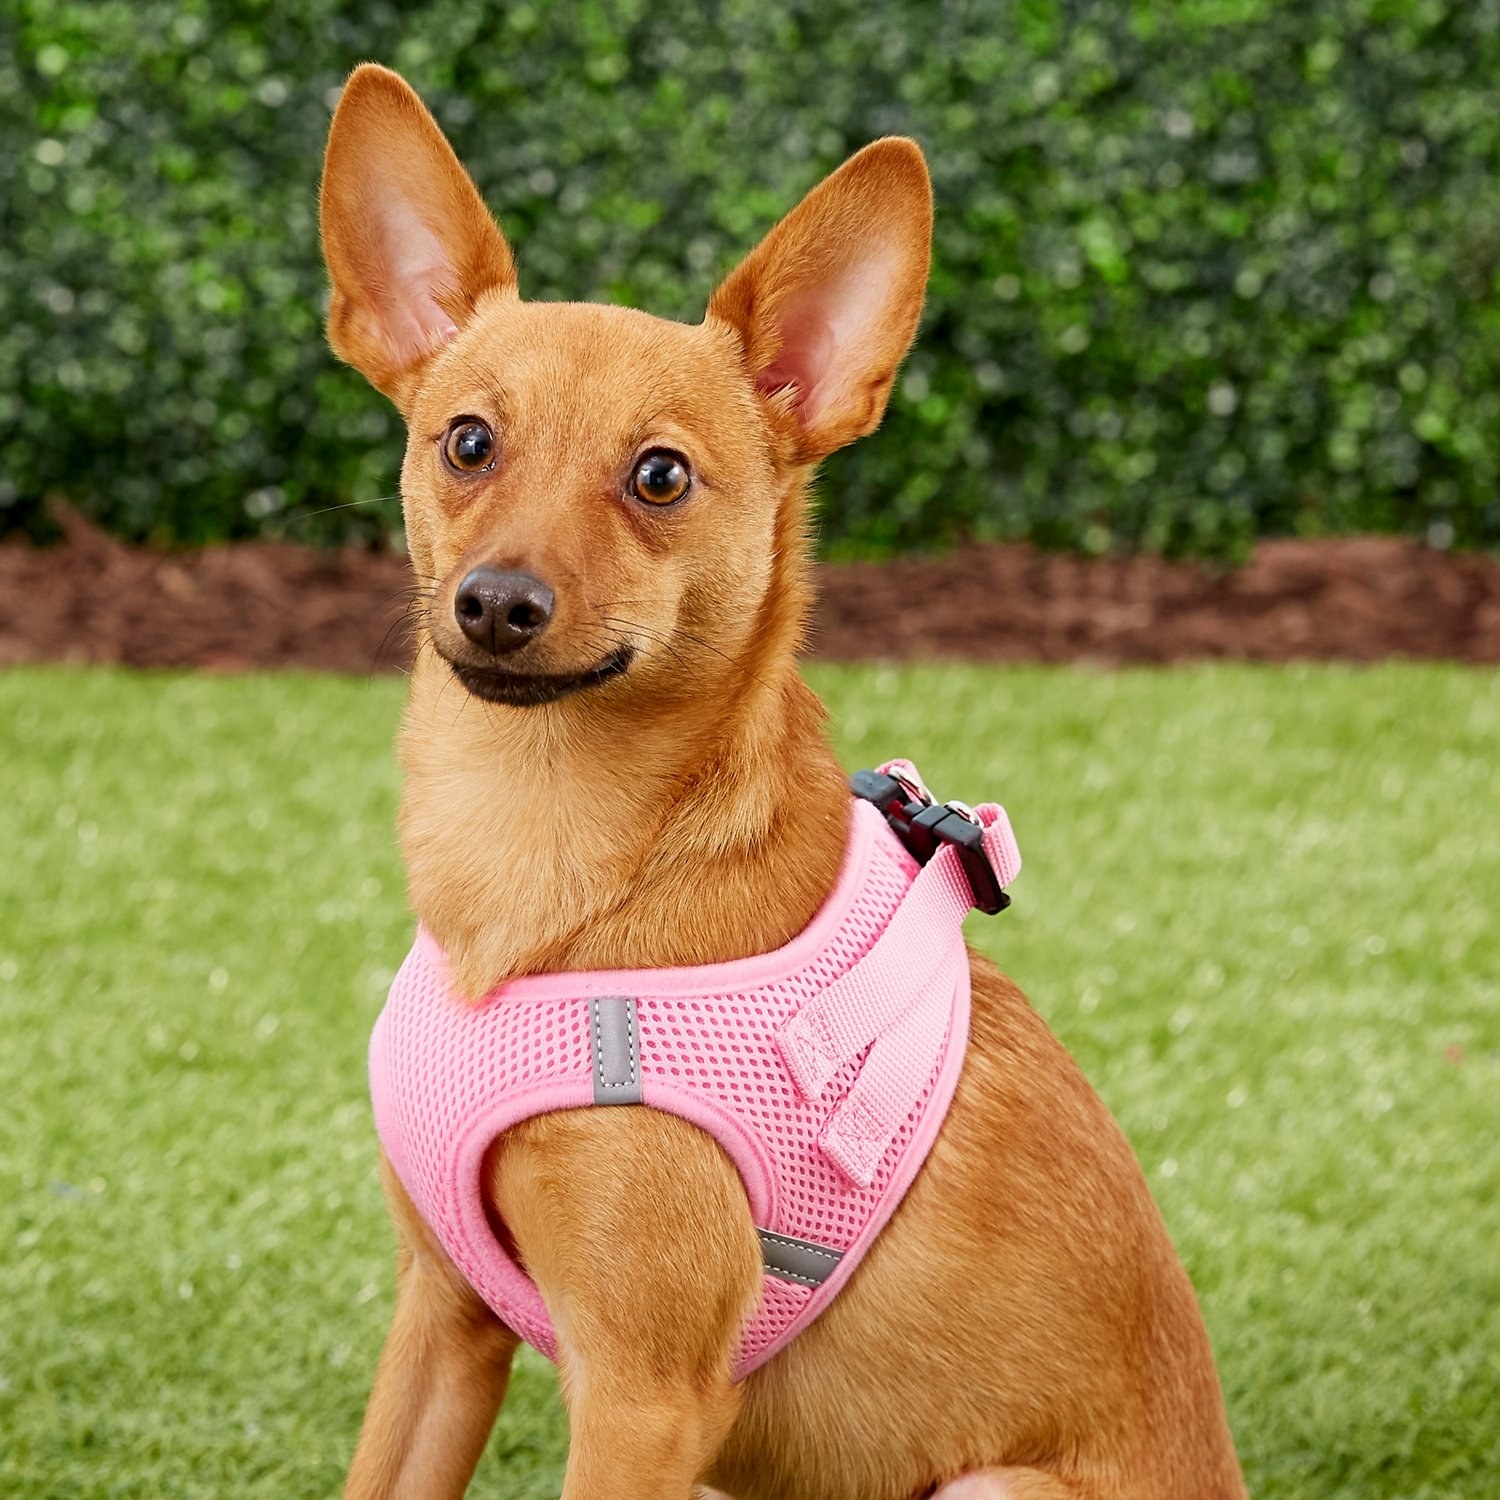 Dog enjoying the pink soft vest strap harness